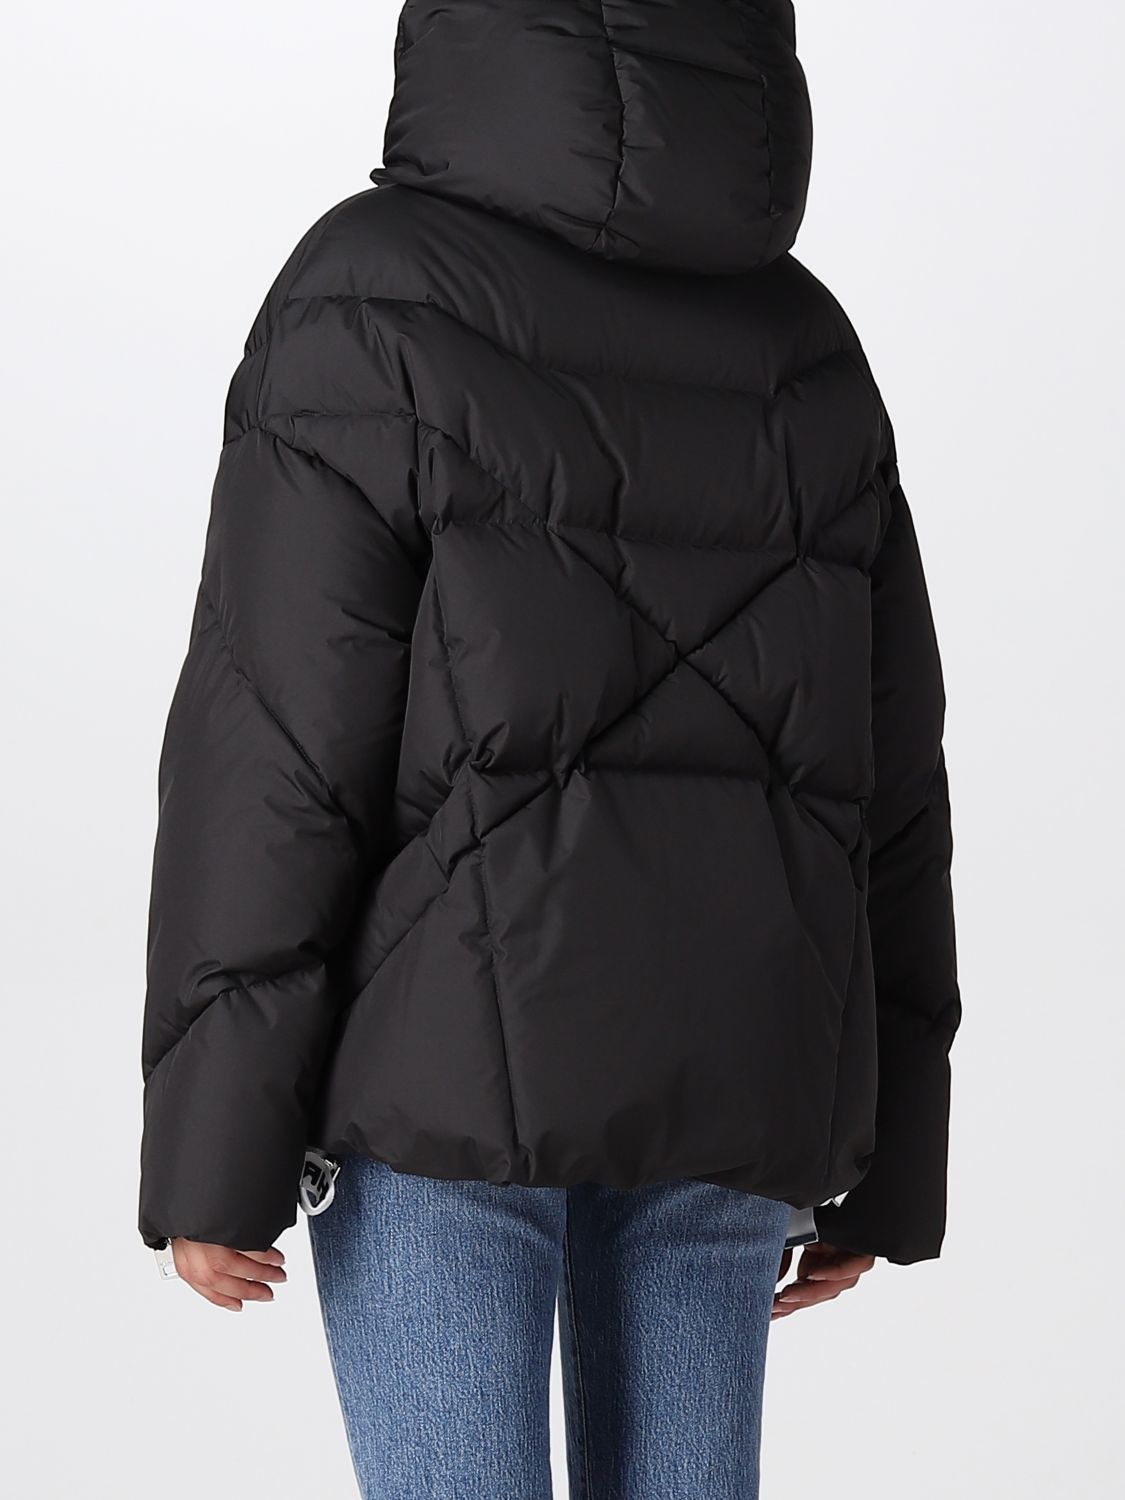 Jacket Khrisjoy: Khrisjoy jacket for women black 2